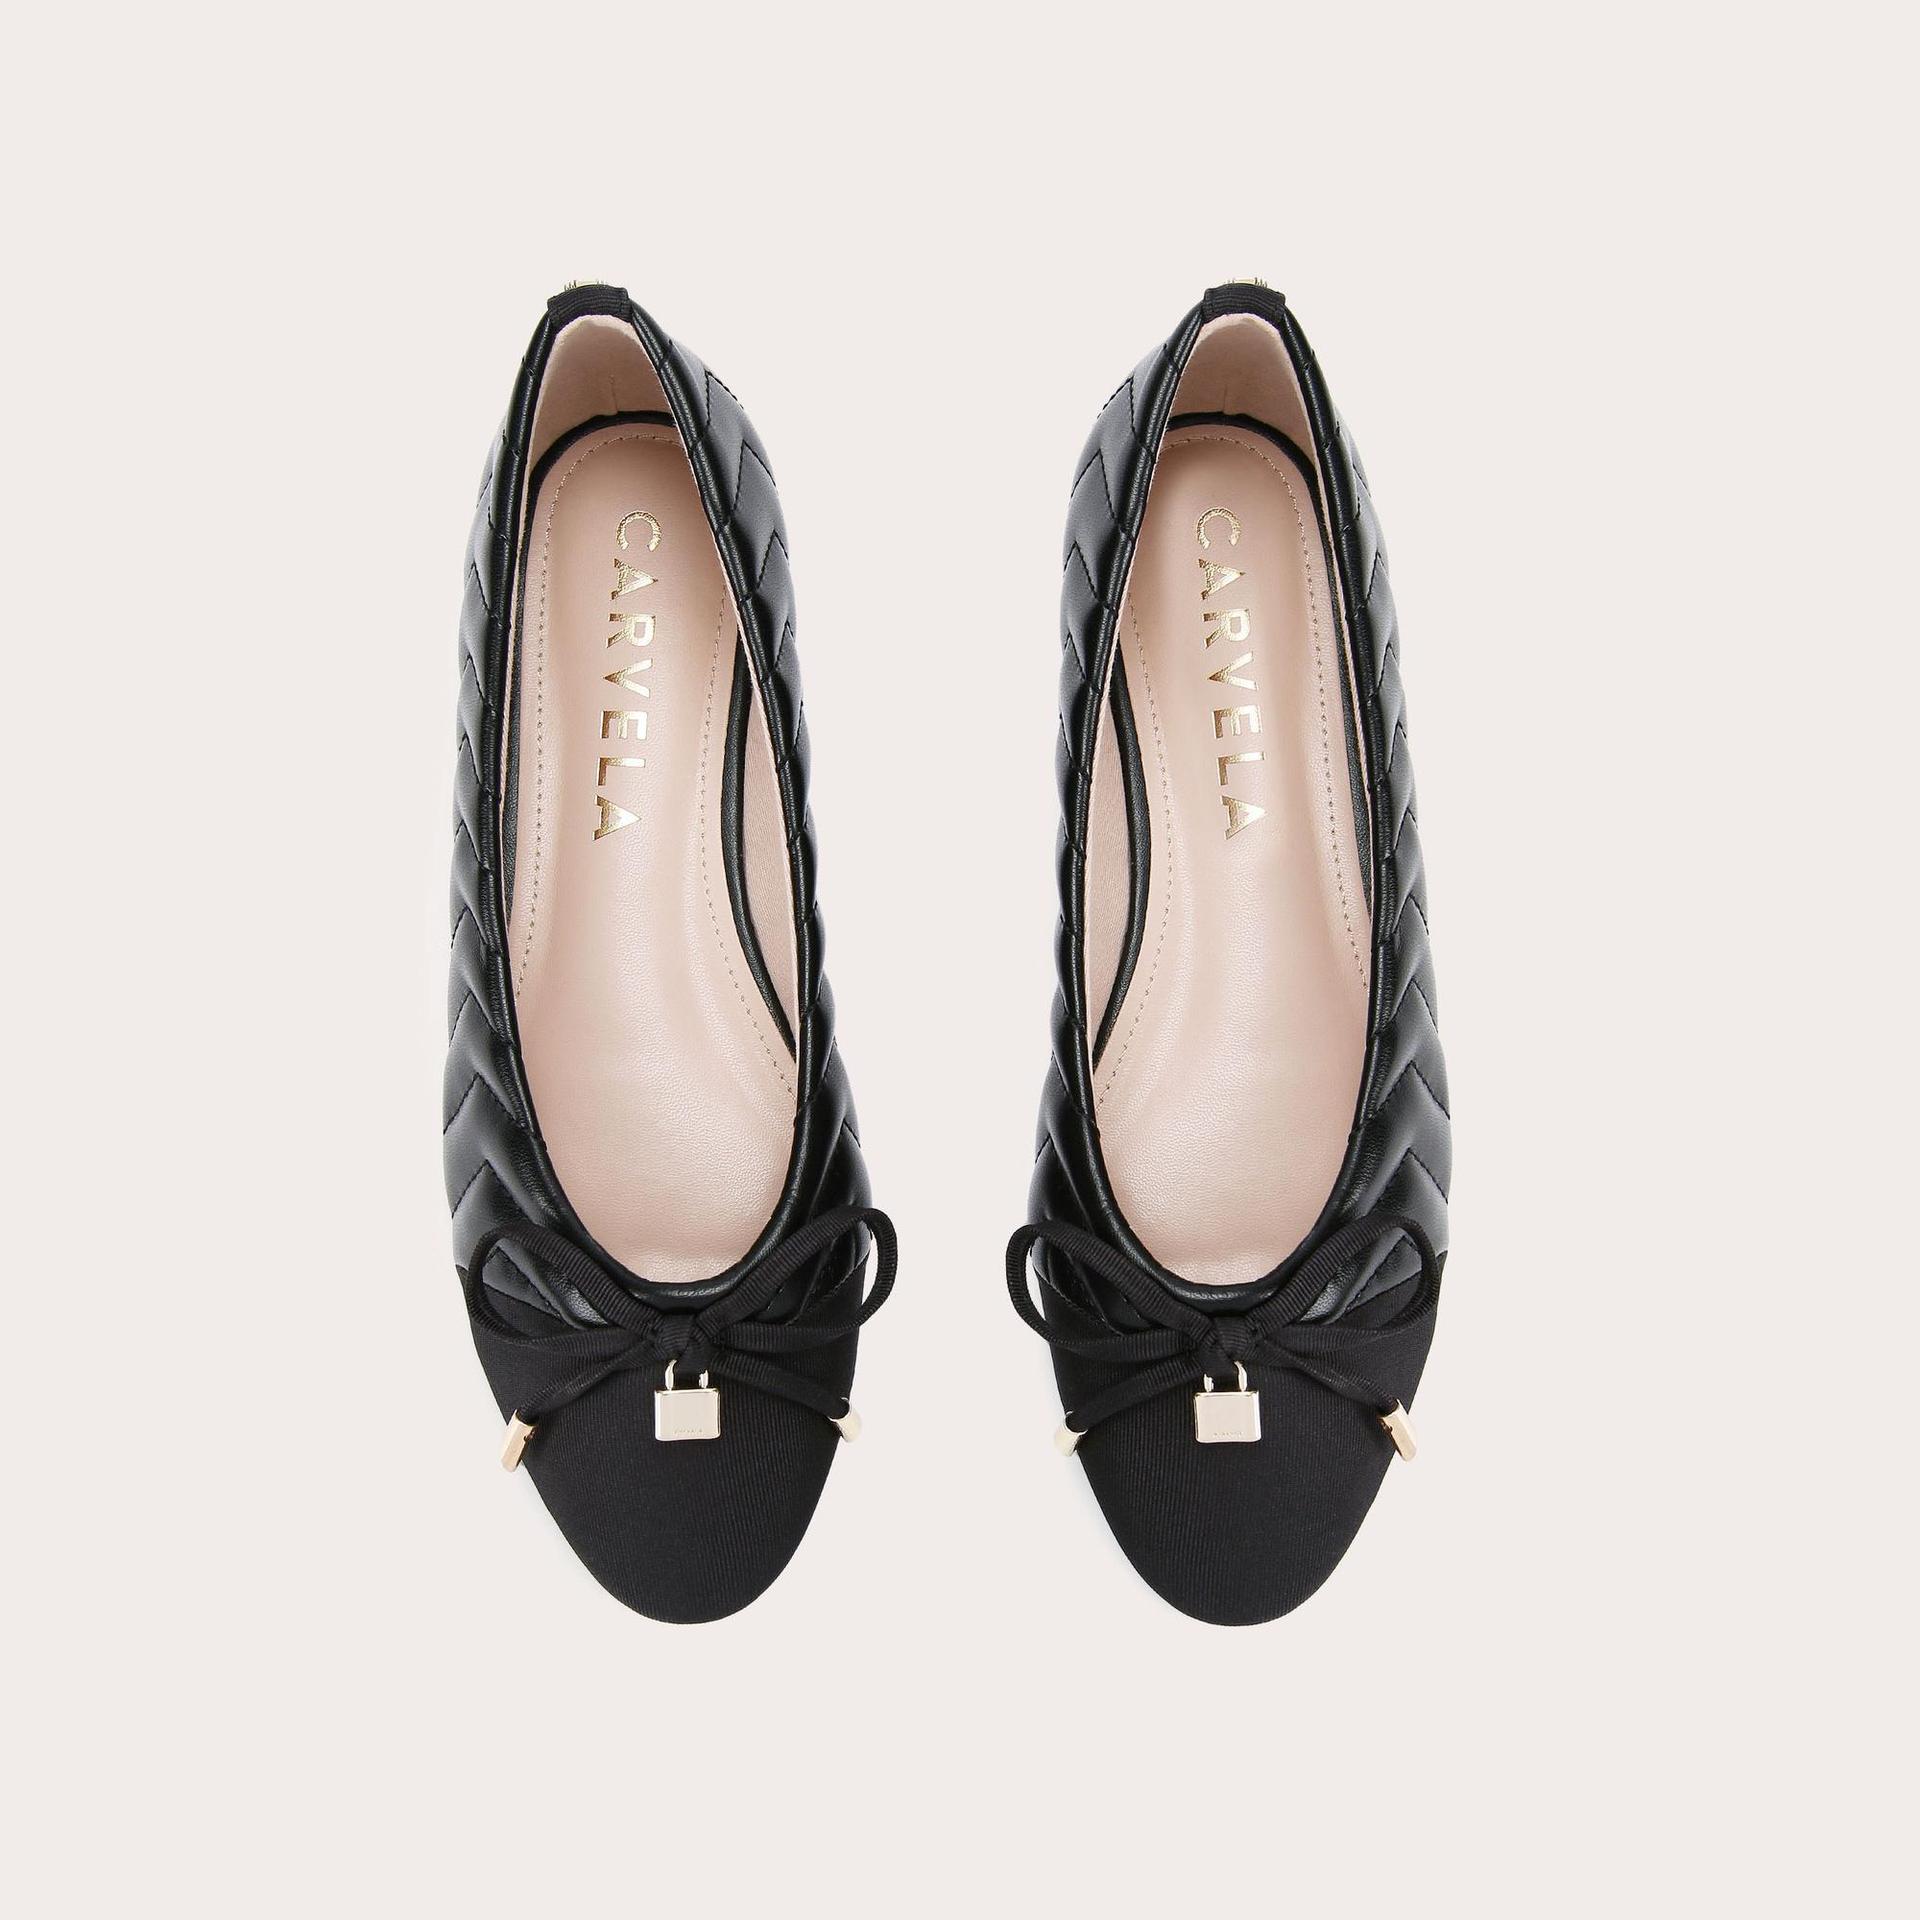 LARA BALLERINA Black Flat Shoes by CARVELA